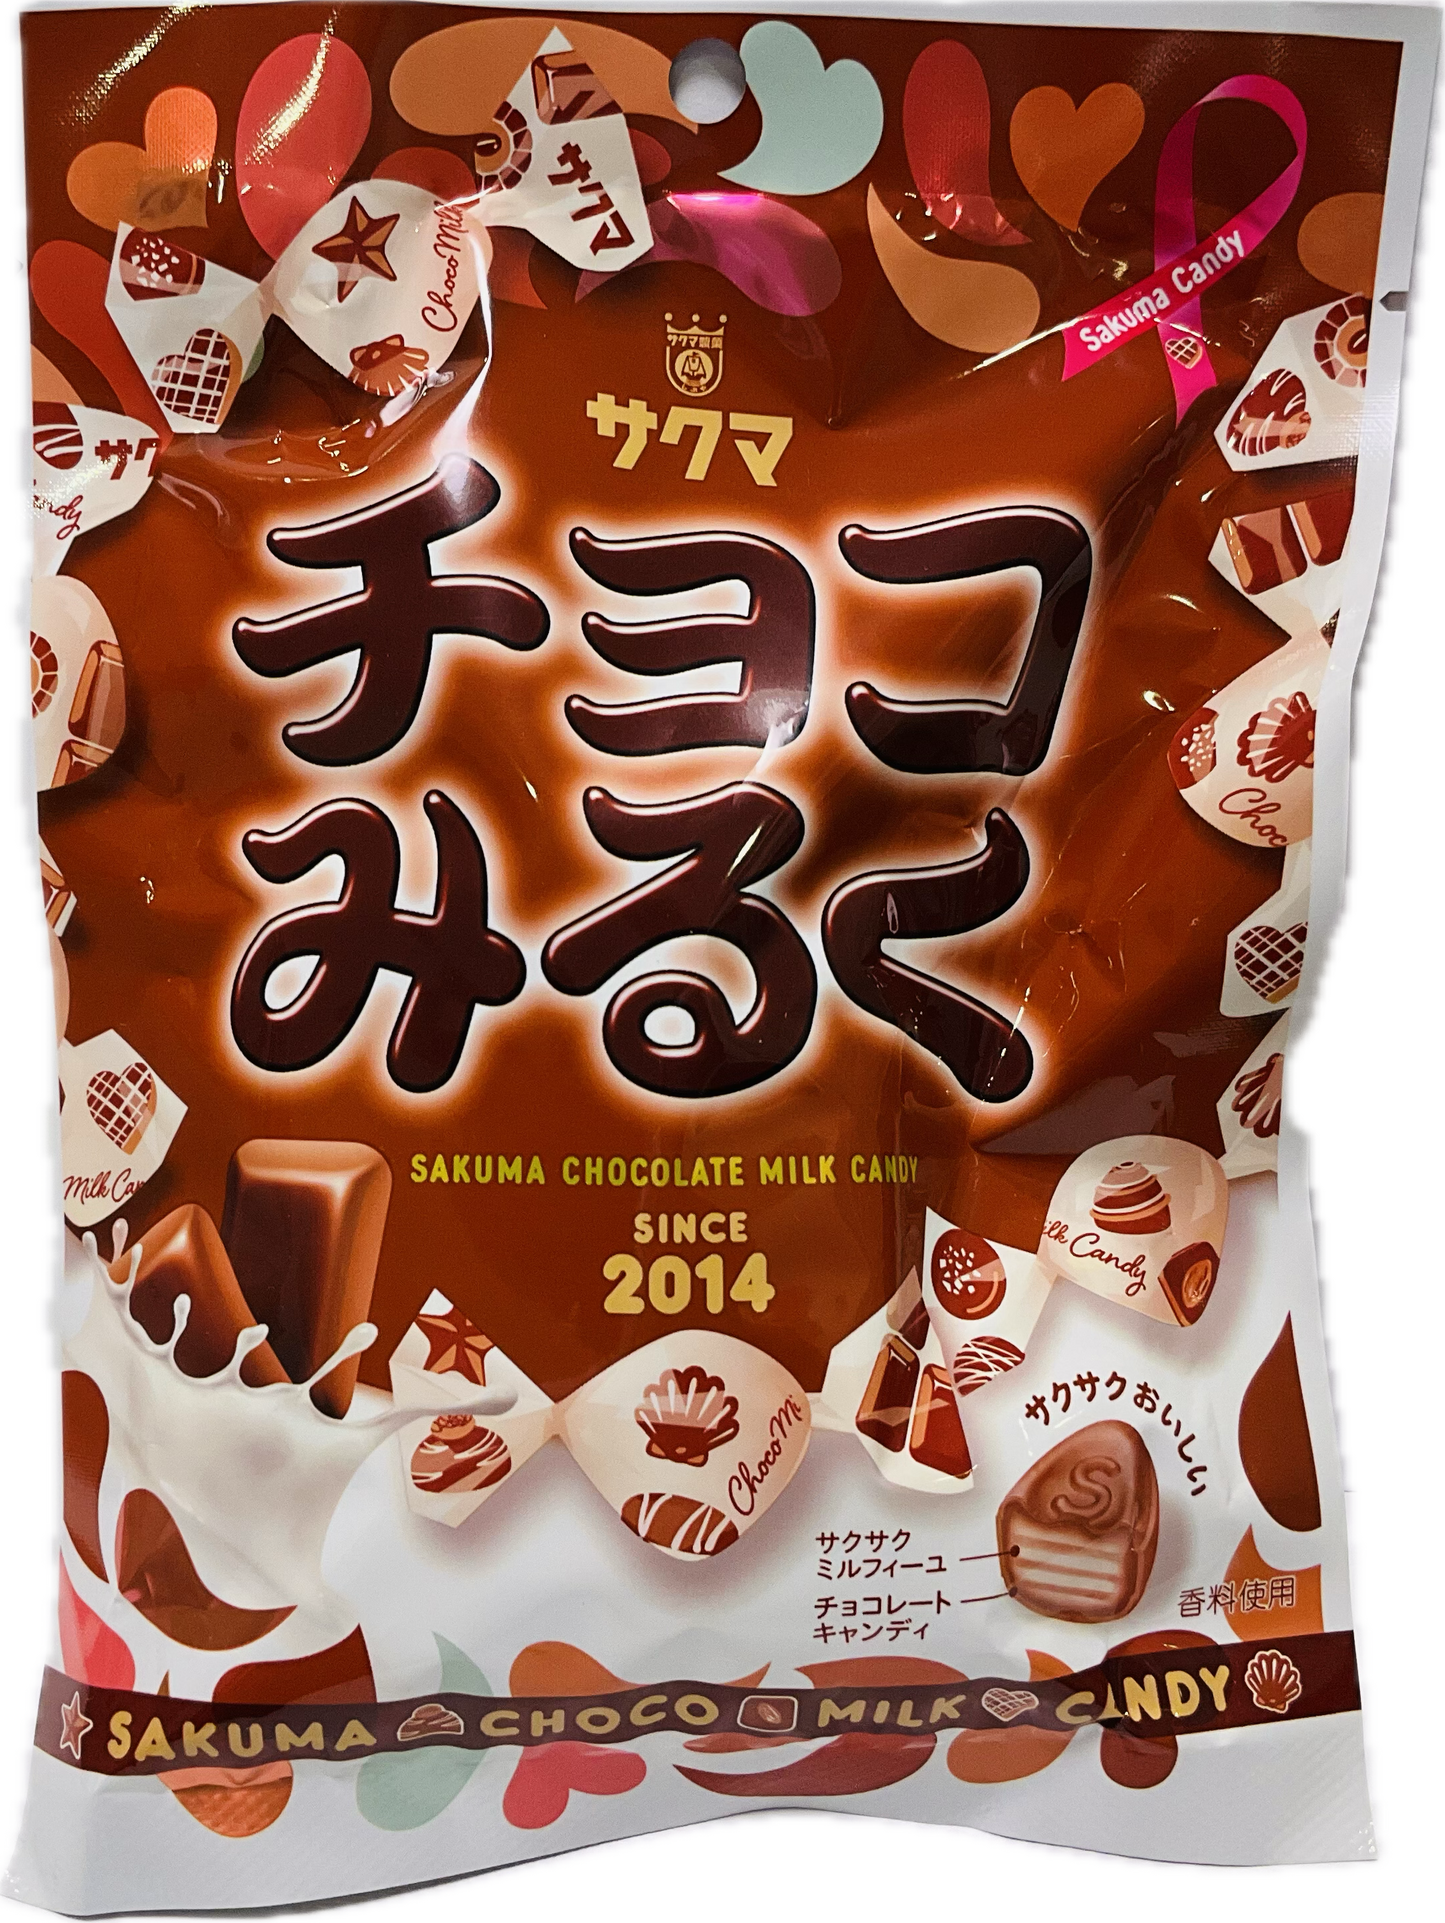 Sakuma chocolate milk